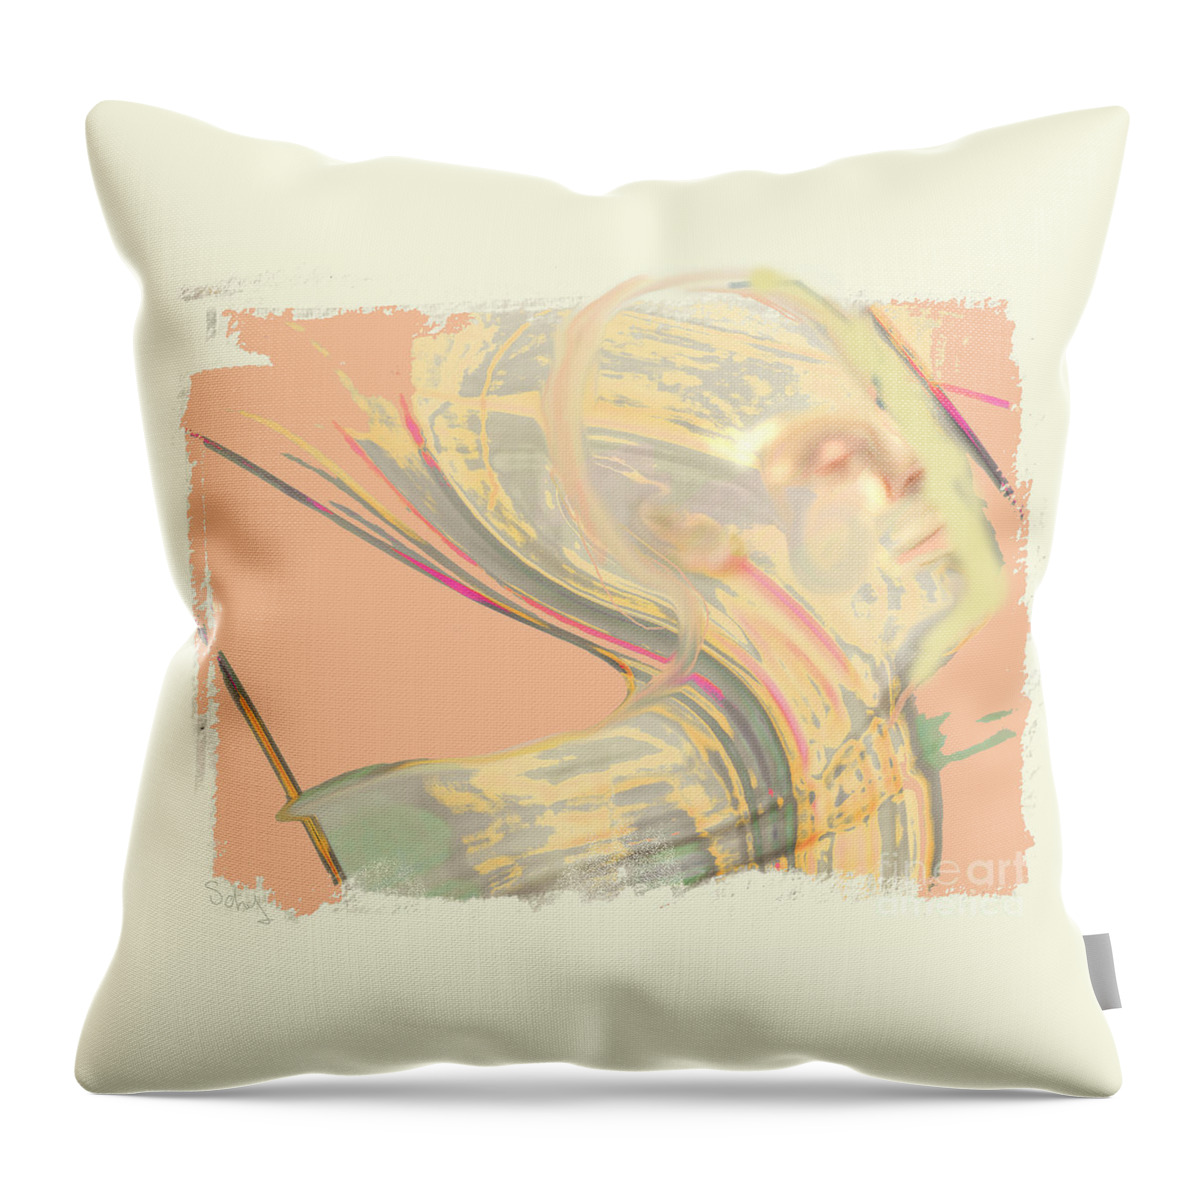 Abstract Throw Pillow featuring the digital art Crossing Over by Gabrielle Schertz